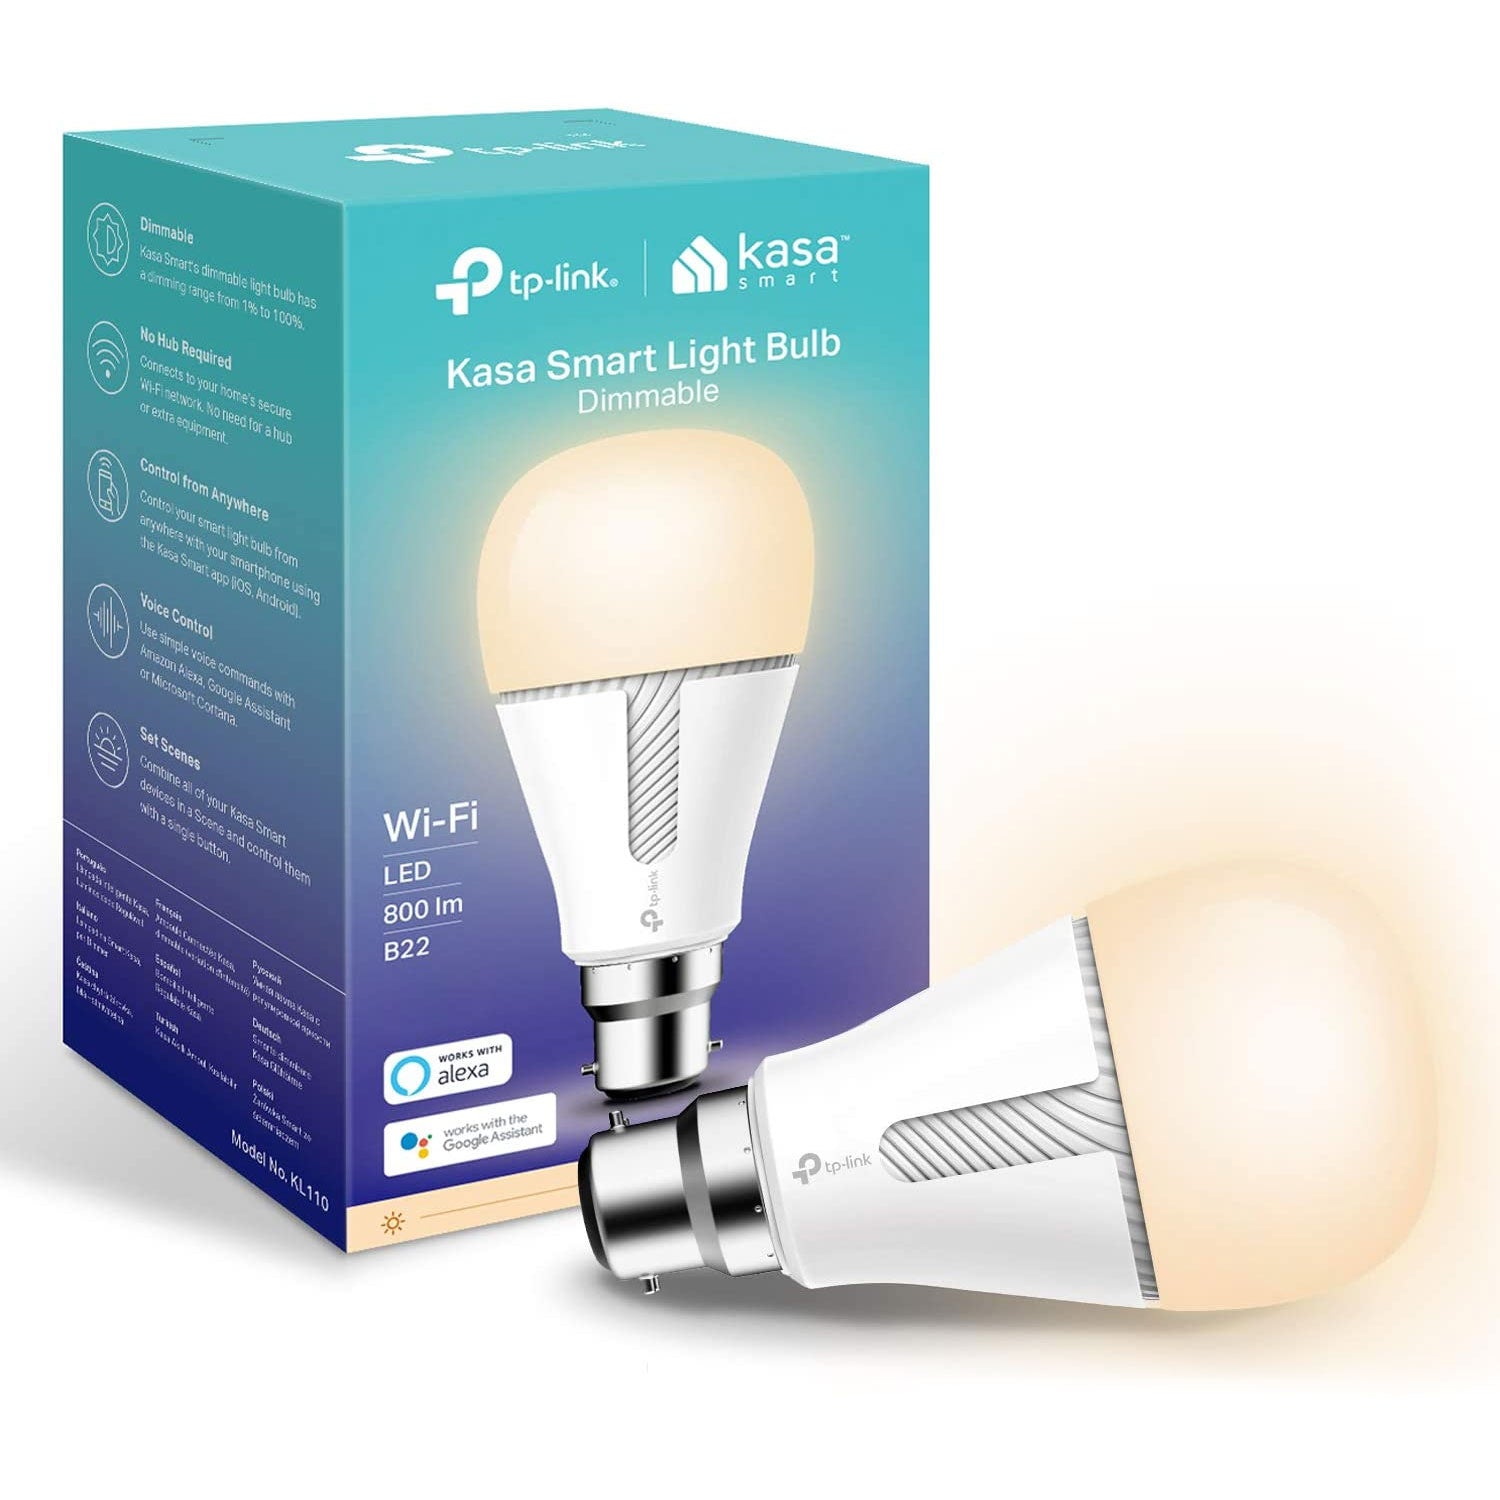 a tp link kasa kl110b smart light bulb and its packaging